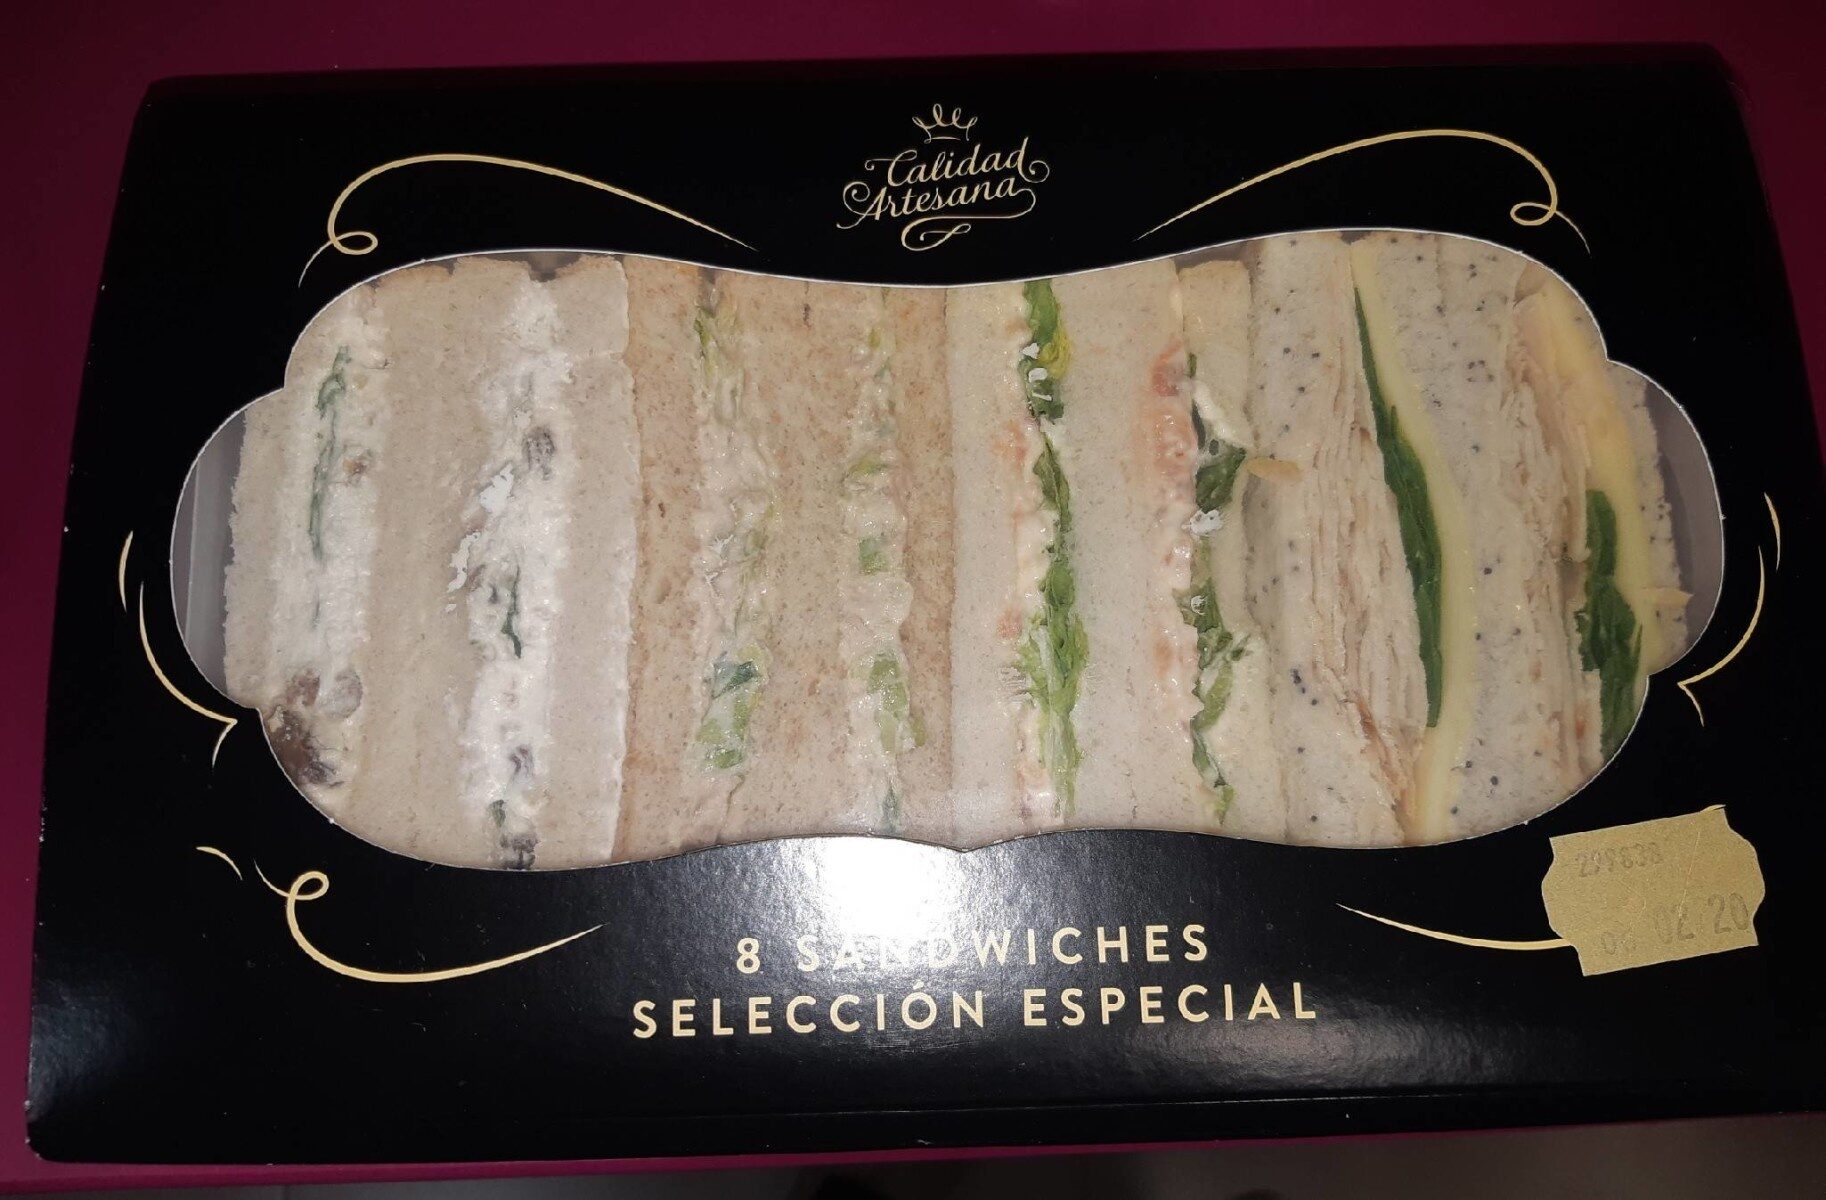 8 Sándwiches Selección Especial - Product - es